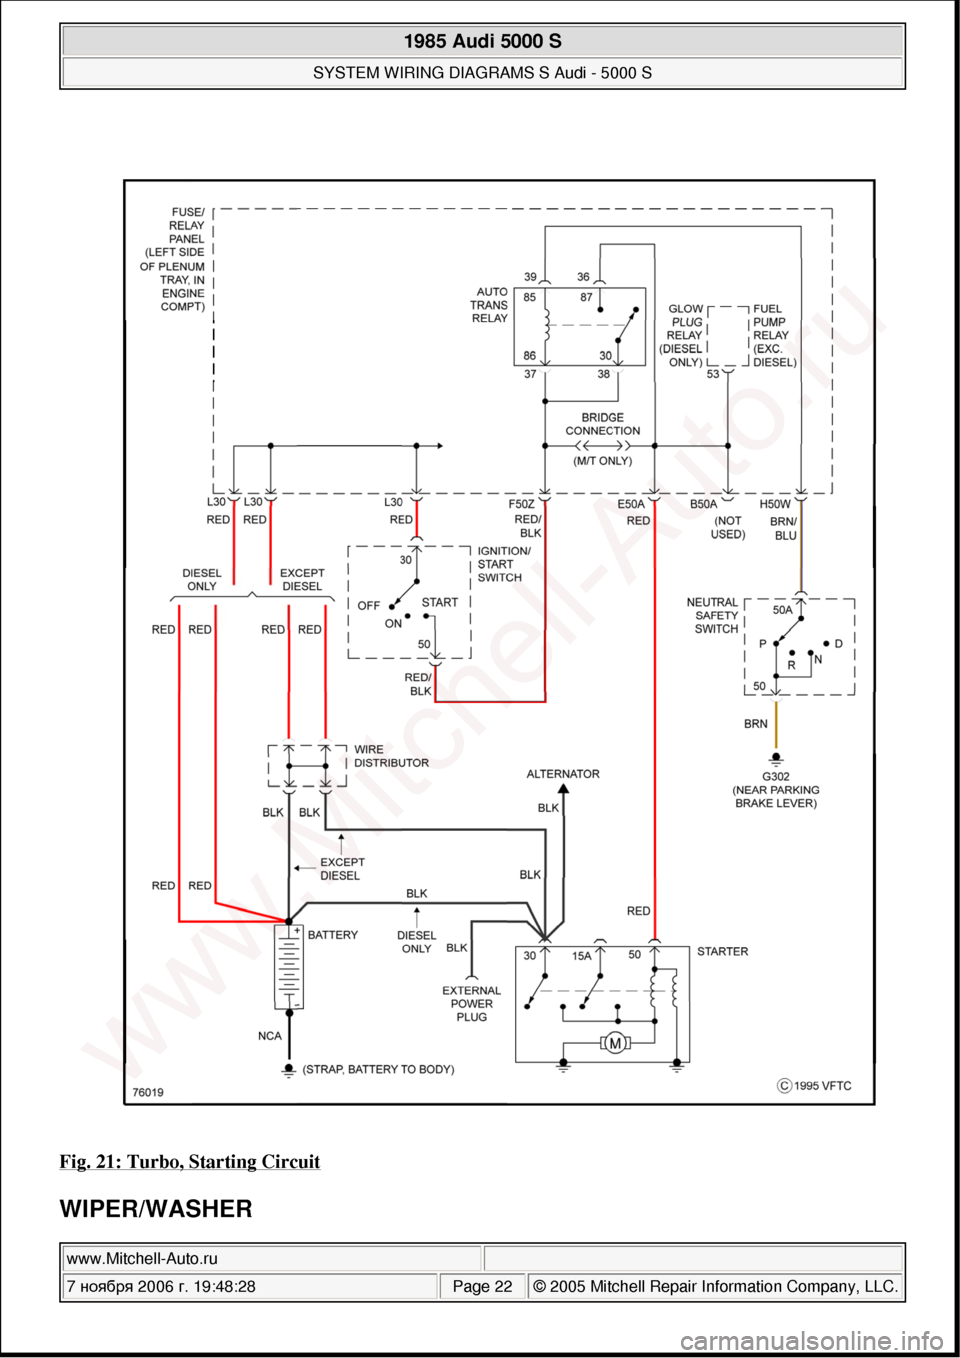 AUDI 5000S 1985 C2 System Wiring Diagram 
Fig. 21: Turbo, Starting Circuit 
WIPER/WASHER 
 
1985 Audi 5000 S 
SYSTEM WIRING DIAGRAMS S Audi - 5000 S  
www.Mitchell-Auto.ru  
7 ноября  2006 г. 19:48:28Page 22 © 2005 Mitchell Repair In